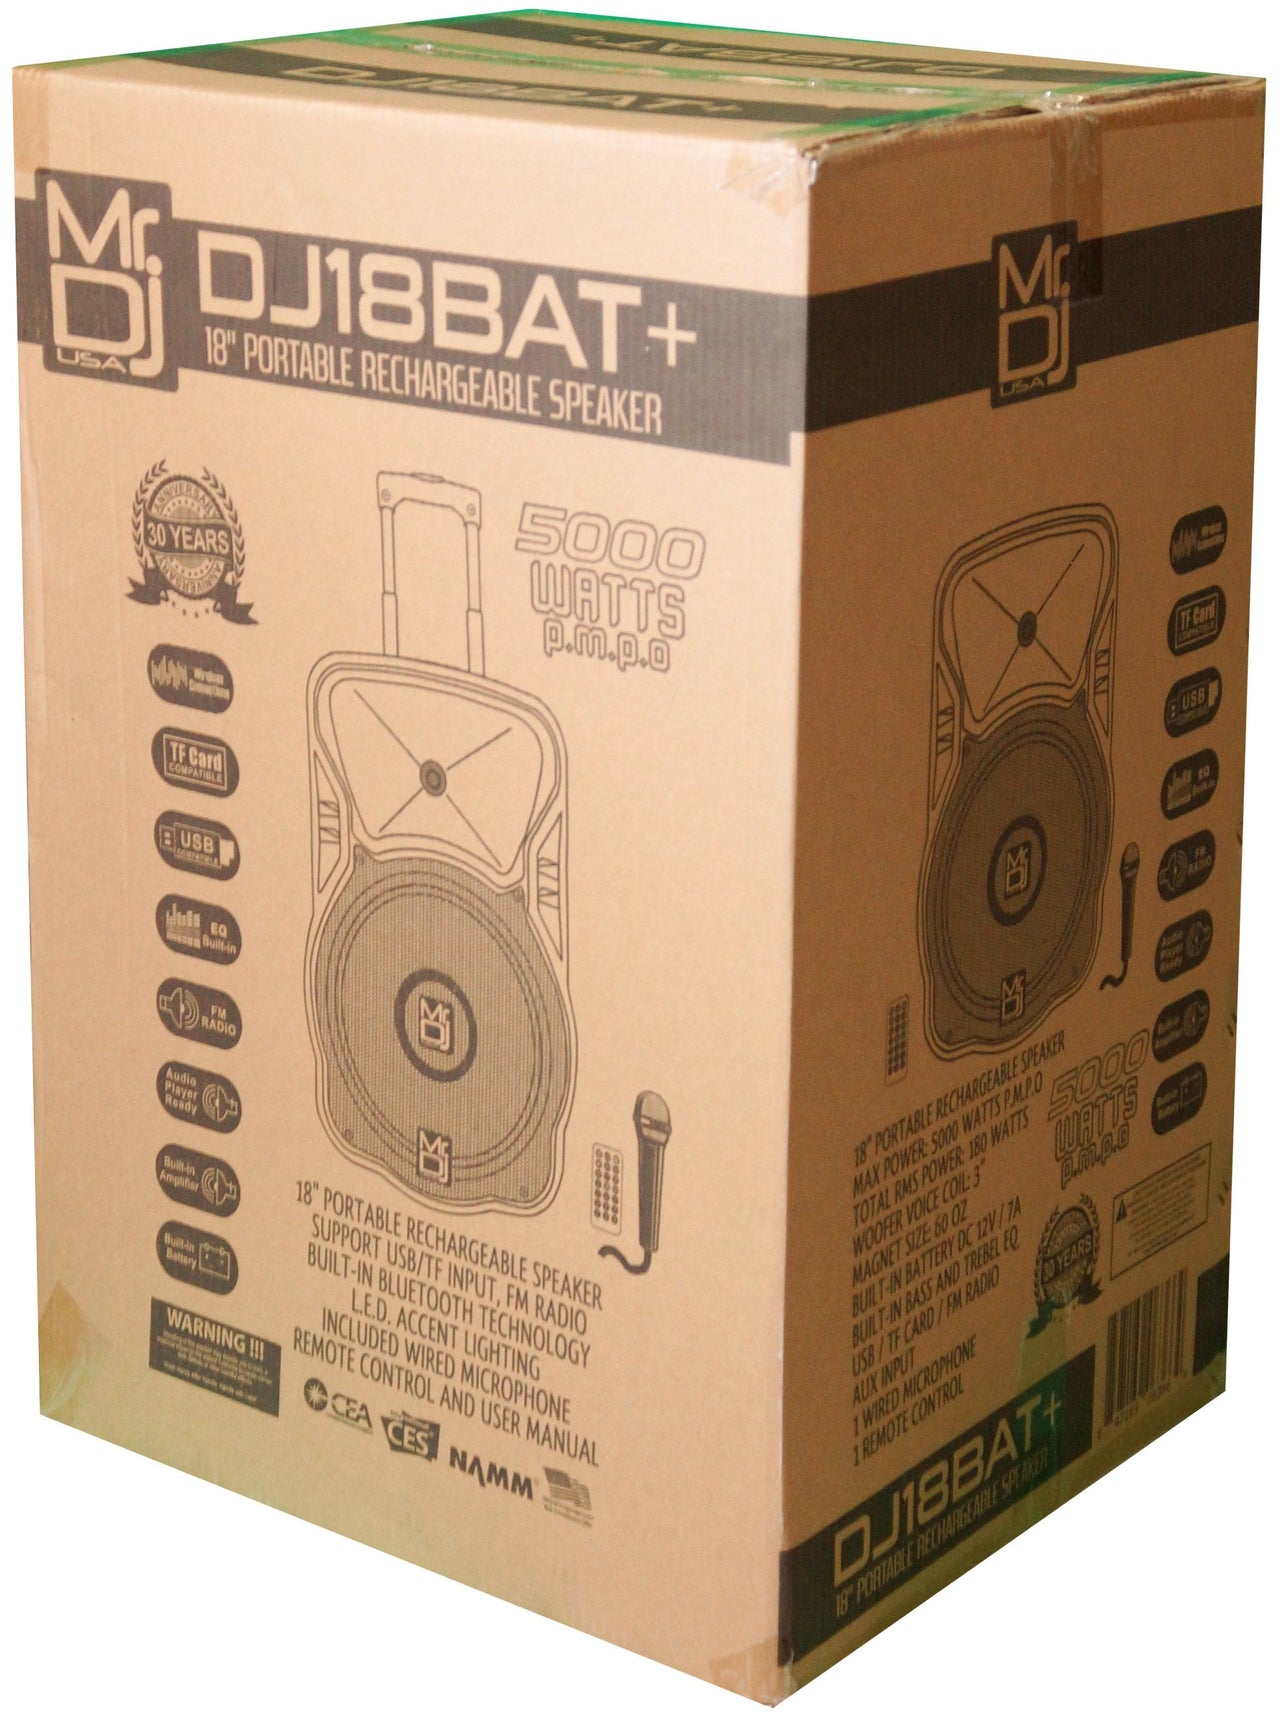 MR DJ DJ18BAT+ 18" Portable Bluetooth Speaker + Speaker Stand